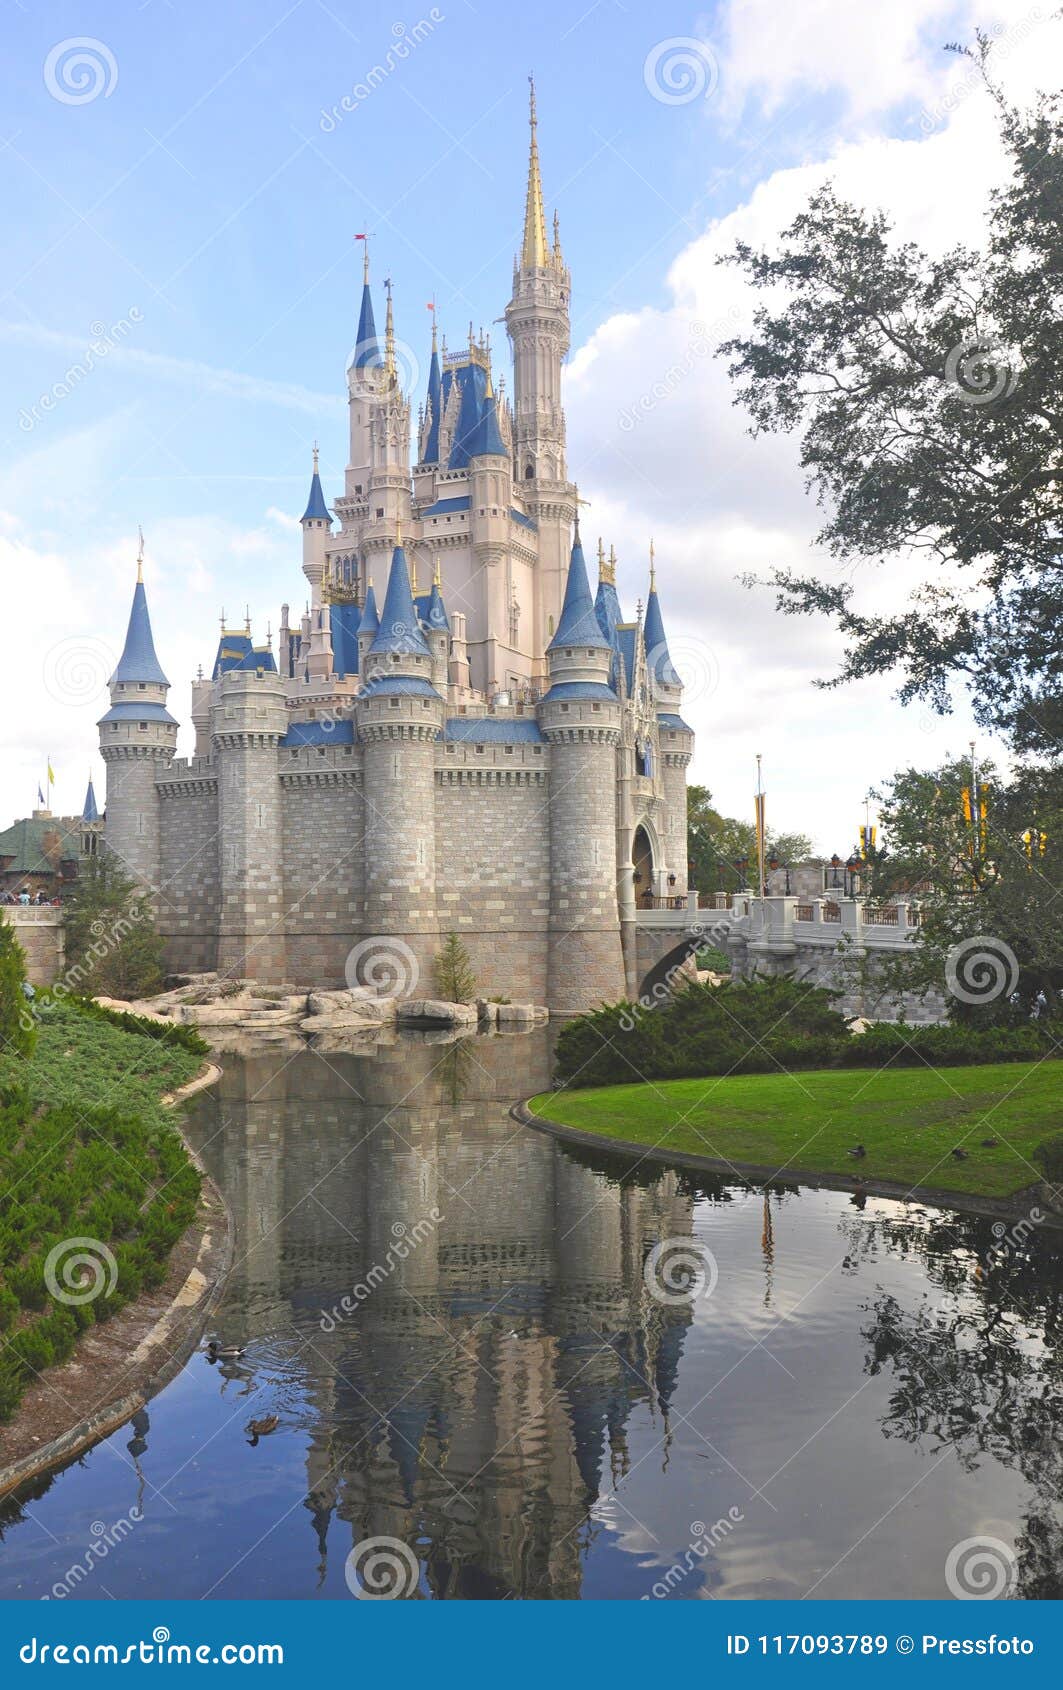 Cinderella Castle at Magic Kingdom Park, Walt Disney World Resort